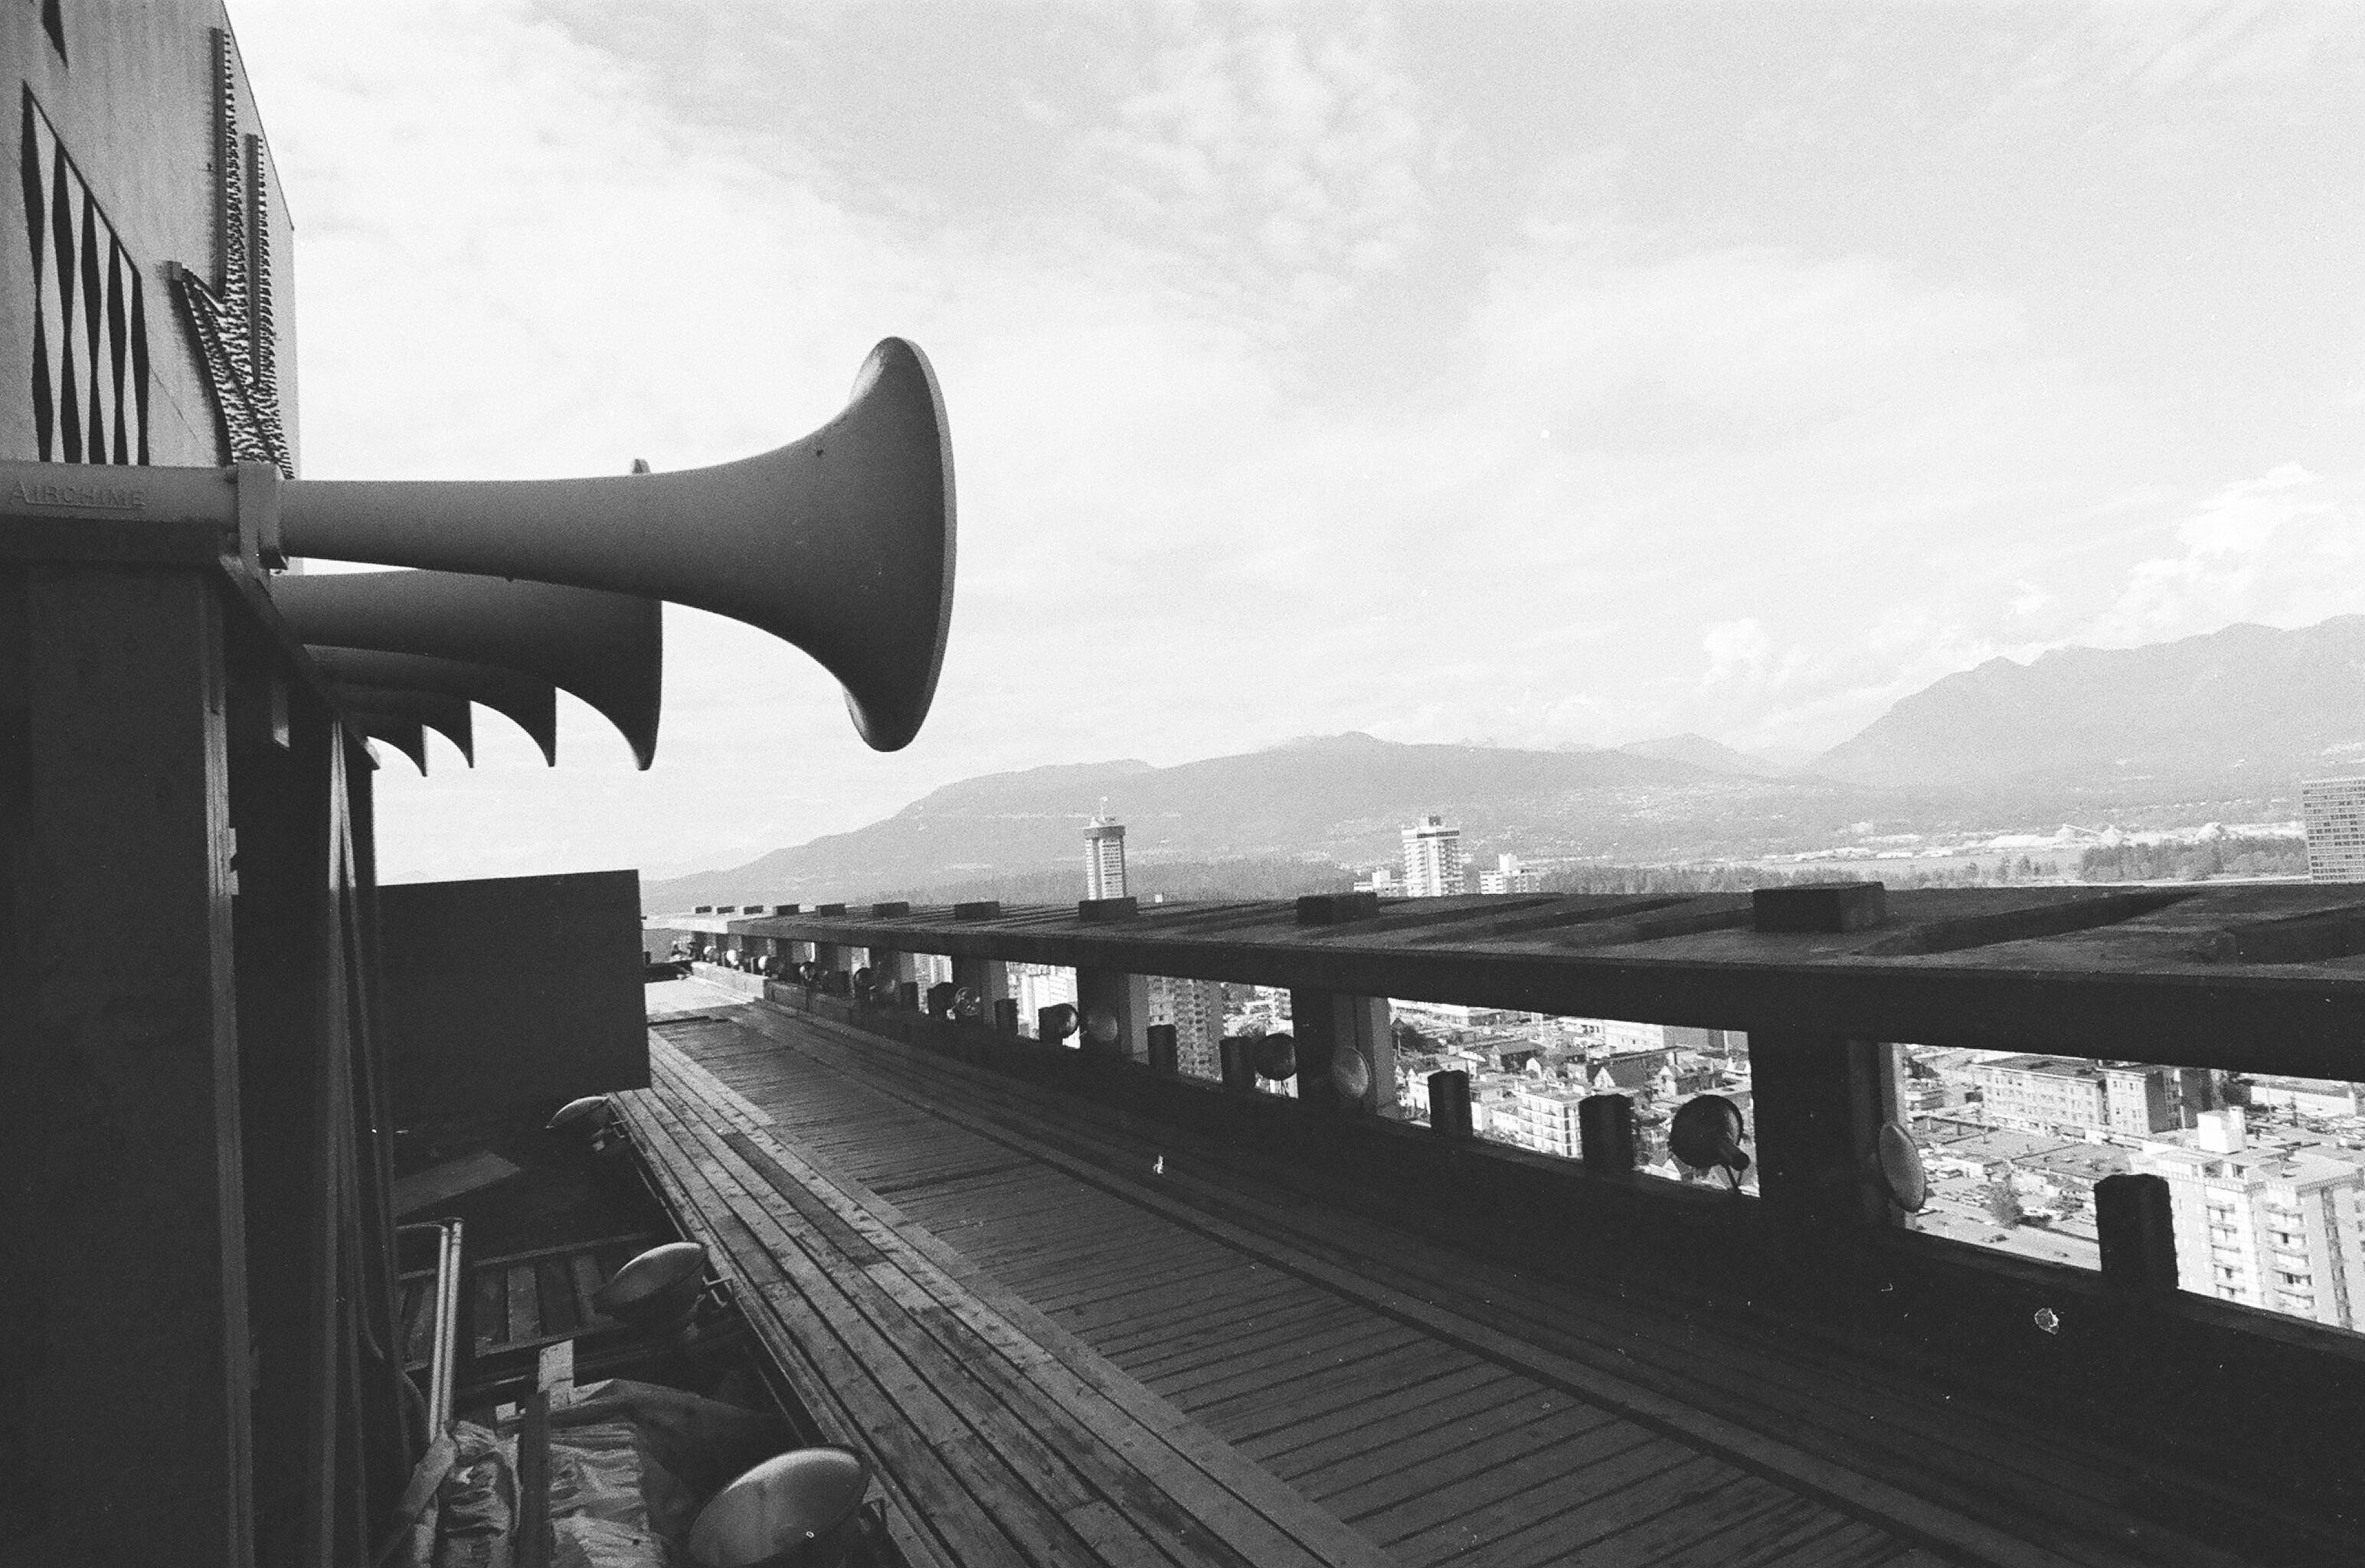 Soundscape Boat Horns, Train Whistle 0'15" (Van109B2)